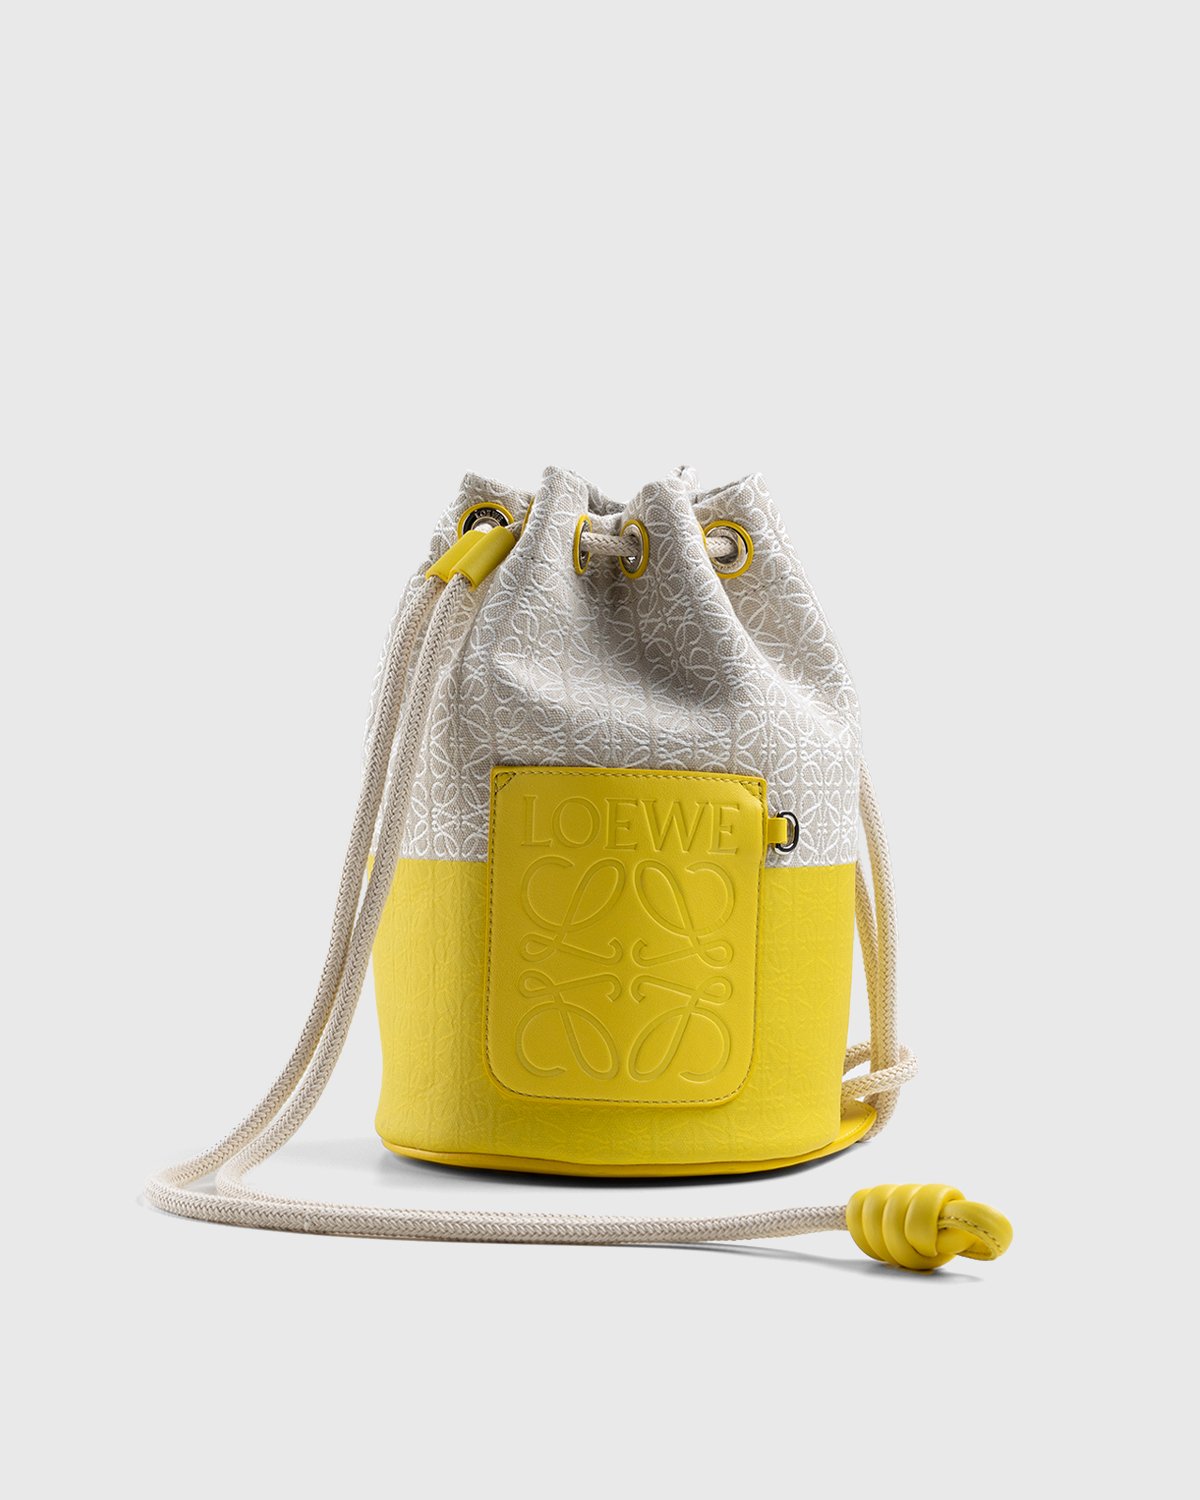 Loewe – Paula's Ibiza Small Sailor Bag Ecru/Lemon